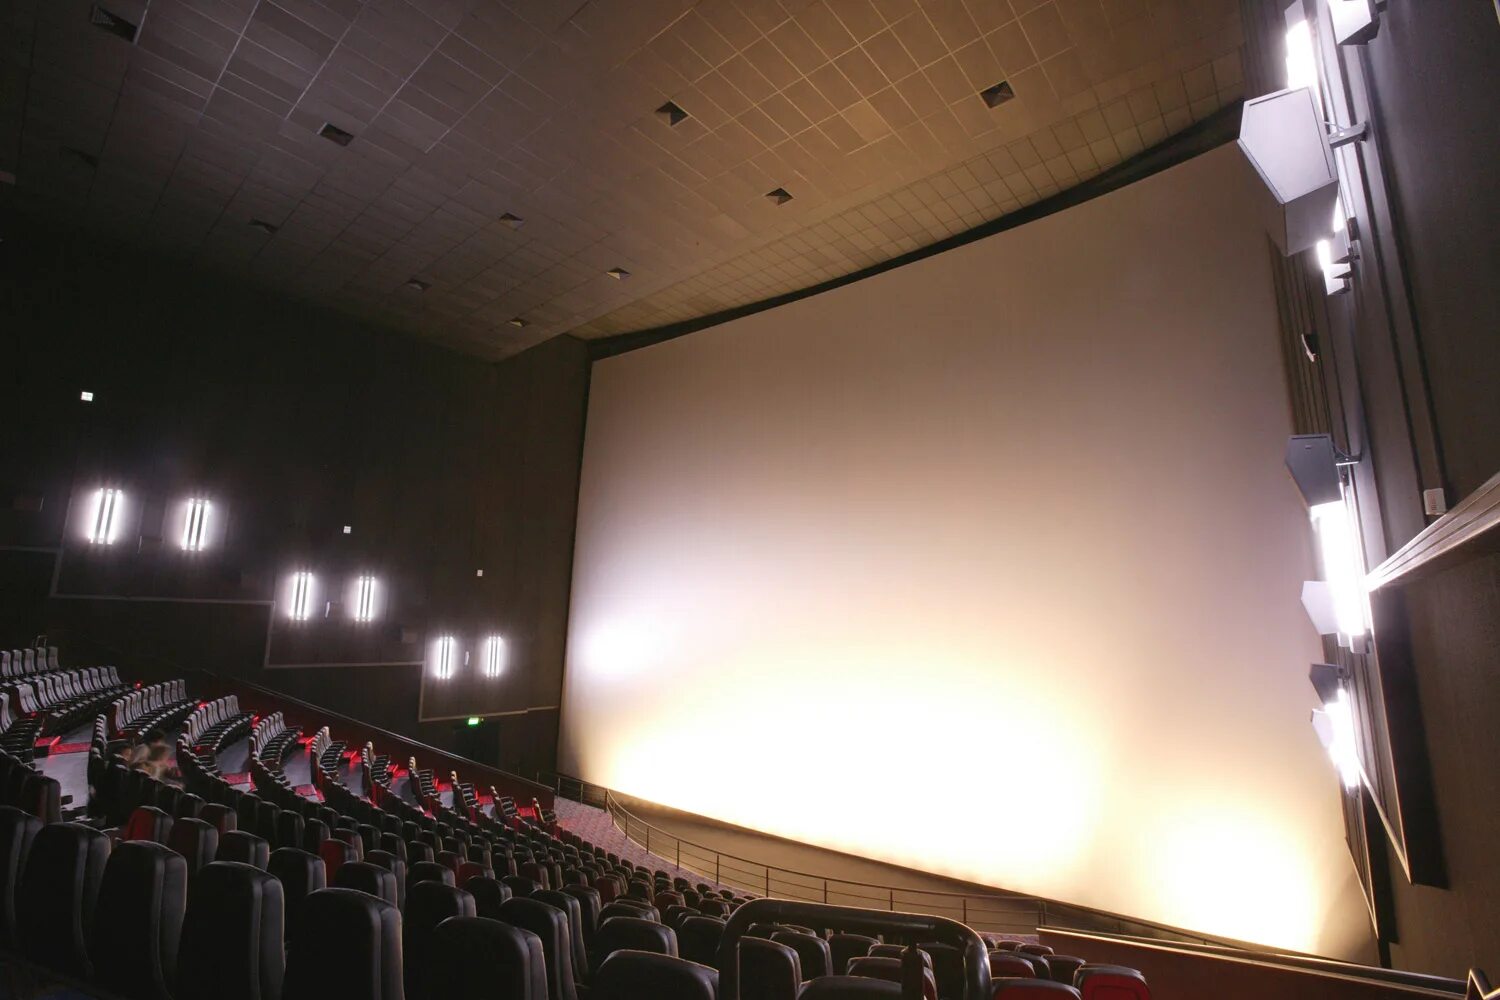 Кинотеатр сбс билеты. СБС кинотеатр Краснодар IMAX. Аймакс СБС Краснодар. Зал IMAX СБС Краснодар. Кинотеатр в Краснодаре аймакс 3д.